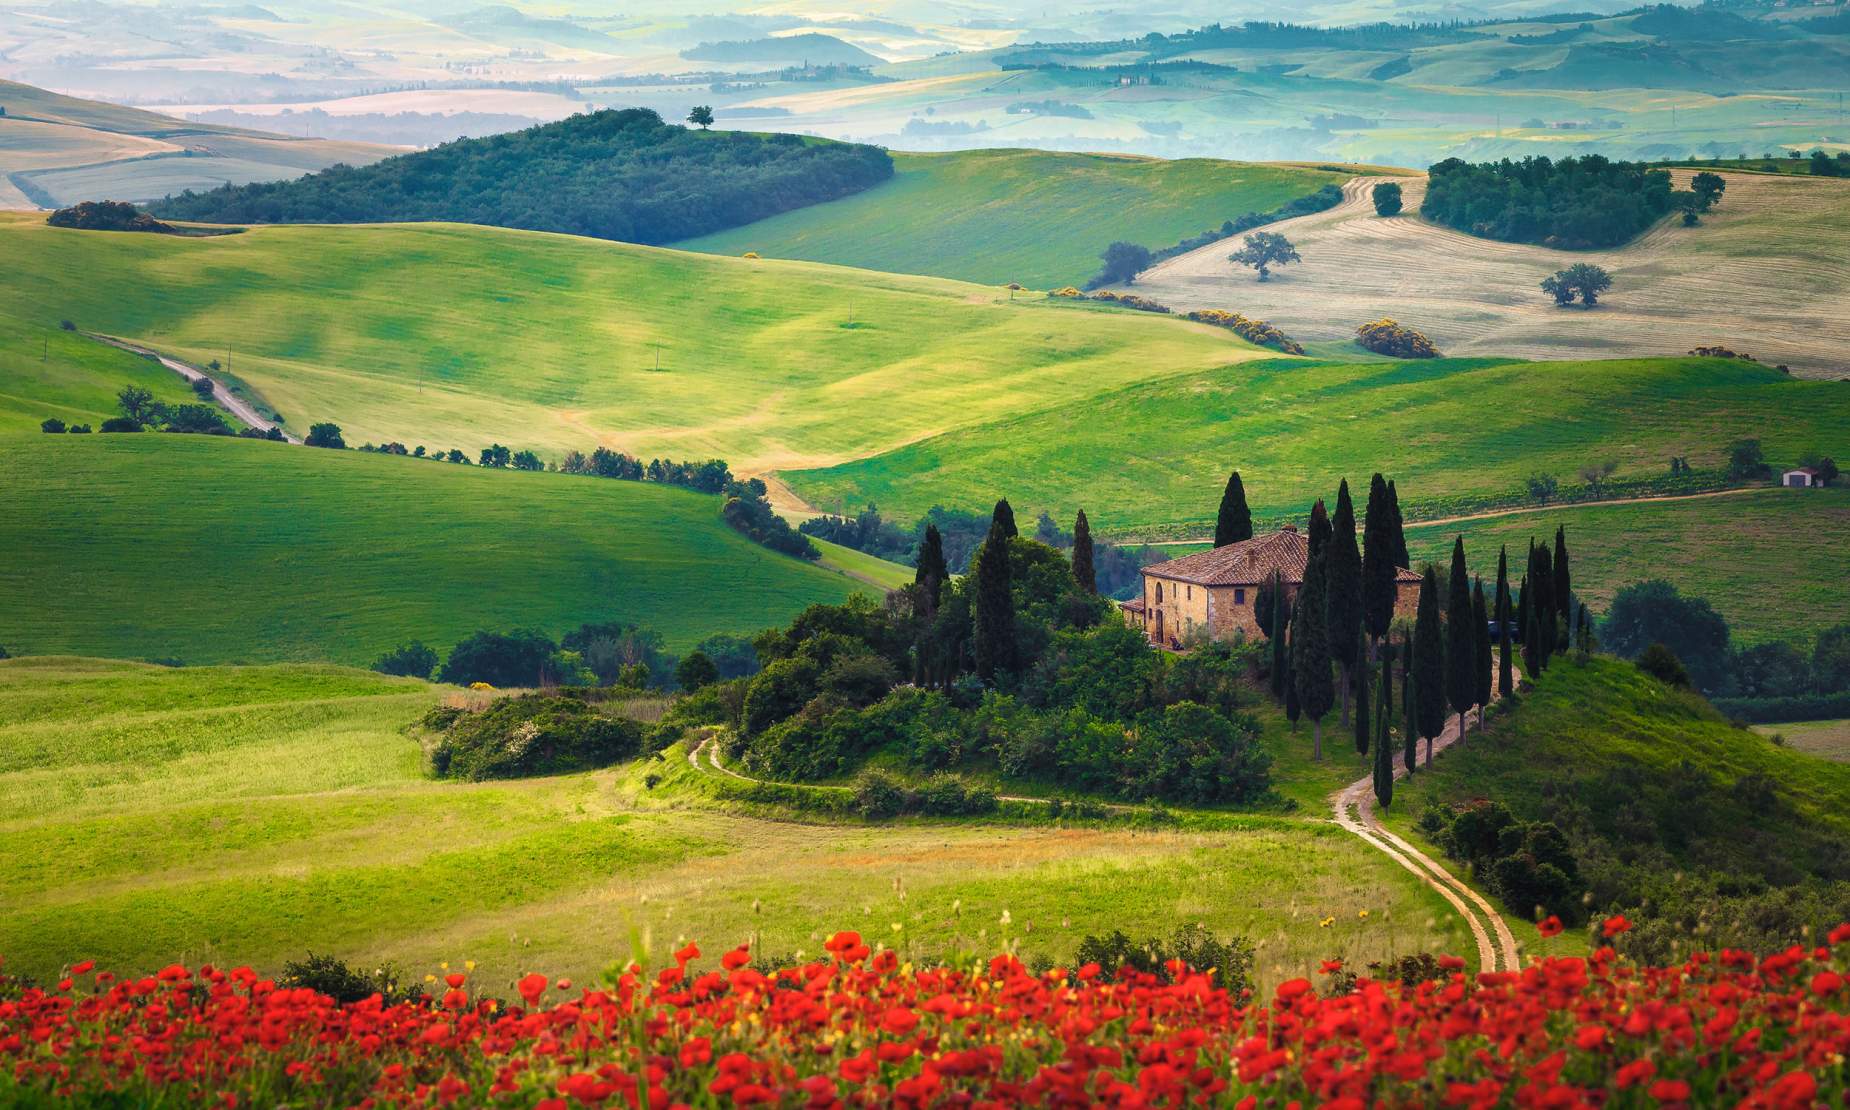 Viaggio in Toscana partenza 3 agosto 2021 - Toscana - Val d'Orcia | Earth Viaggi Tour Operator